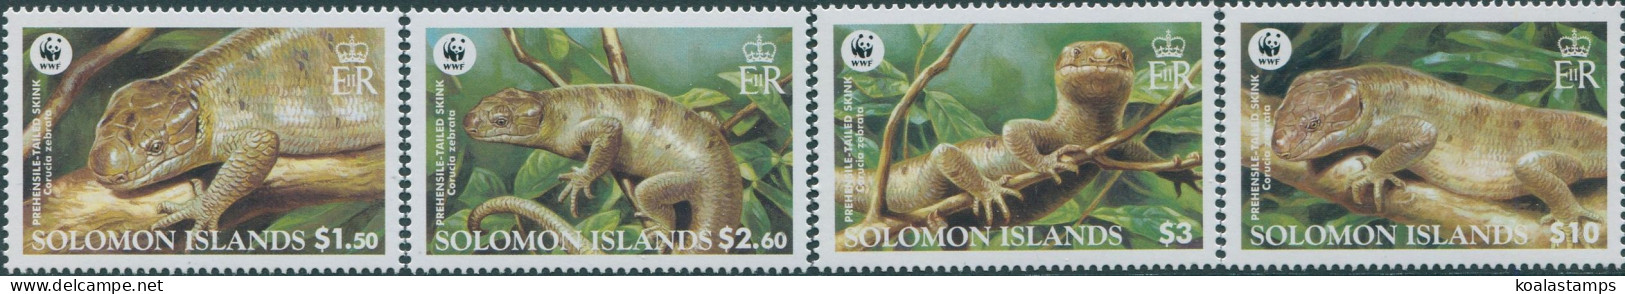 Solomon Islands 2005 SG1162-65 WWF Skink Set MNH - Salomon (Iles 1978-...)